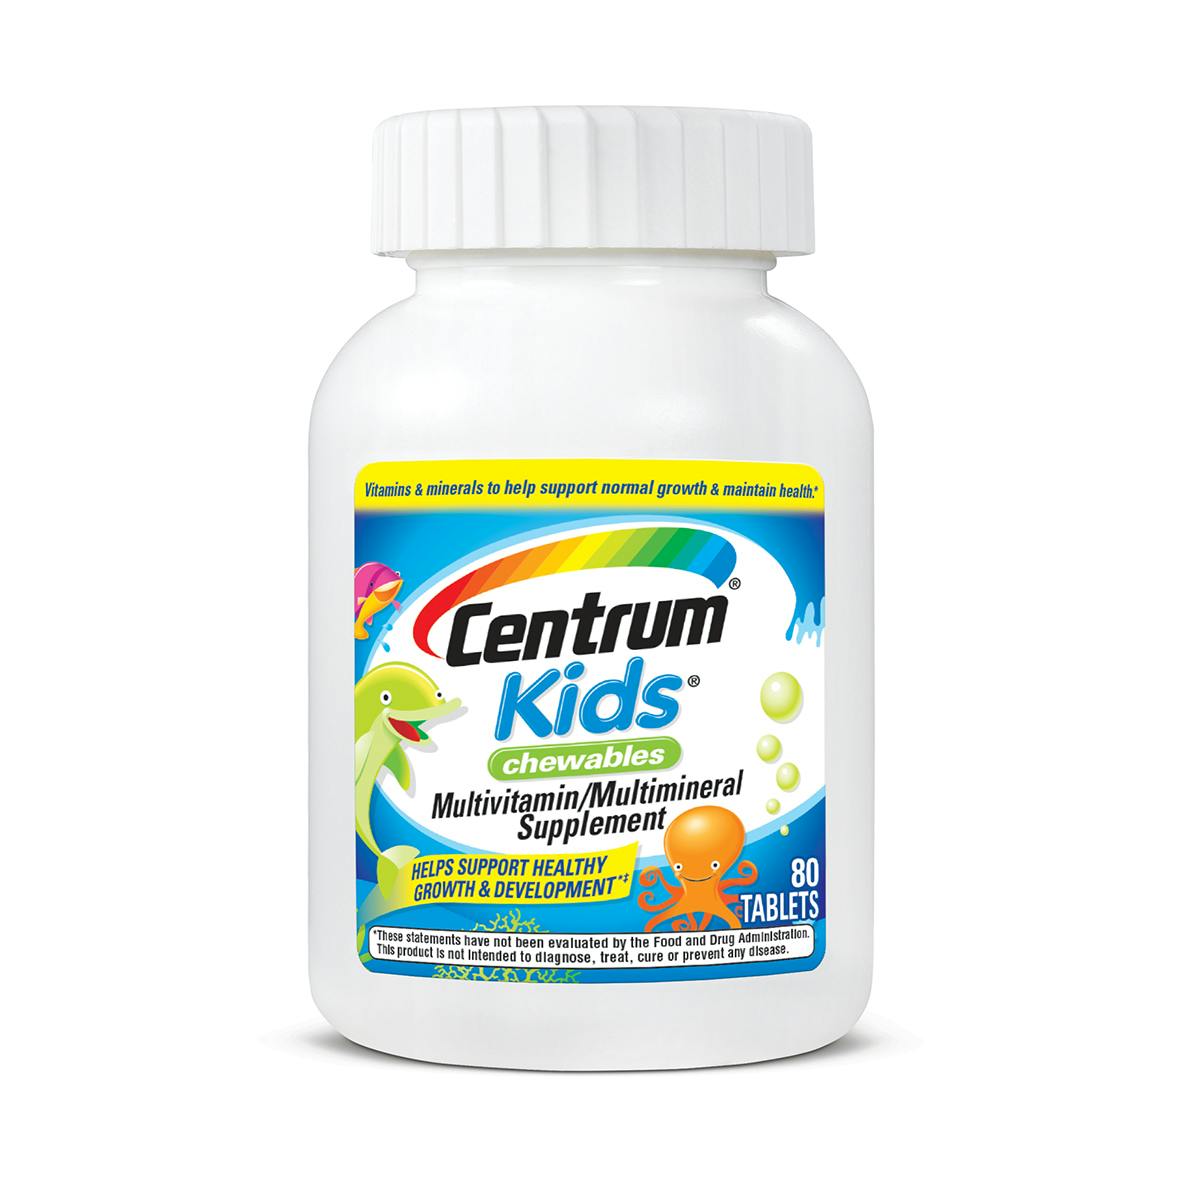 Bottle of Centrum Kids multivitamins2